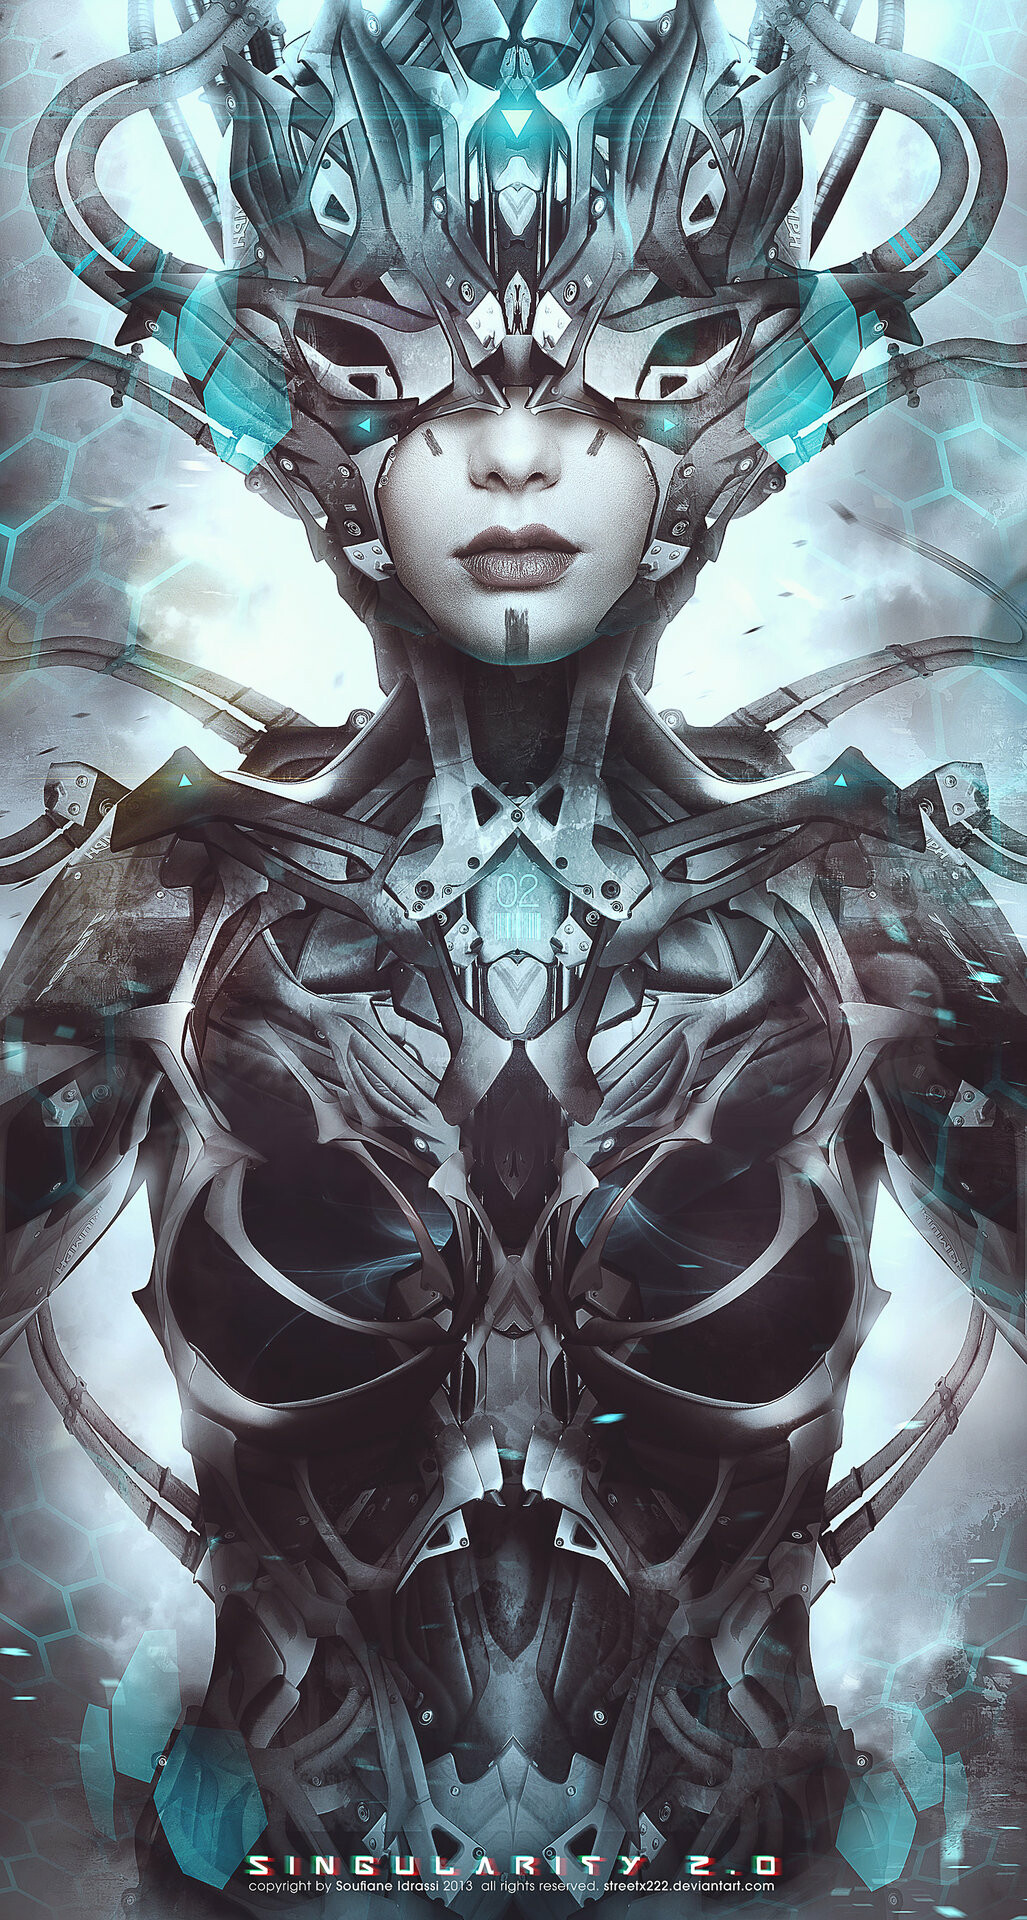 Soufiane Idrassi Drawing Cyborg Hose Circuits Science Fiction Cyberpunk Women Grid Glowing Frontal V 1027x1920